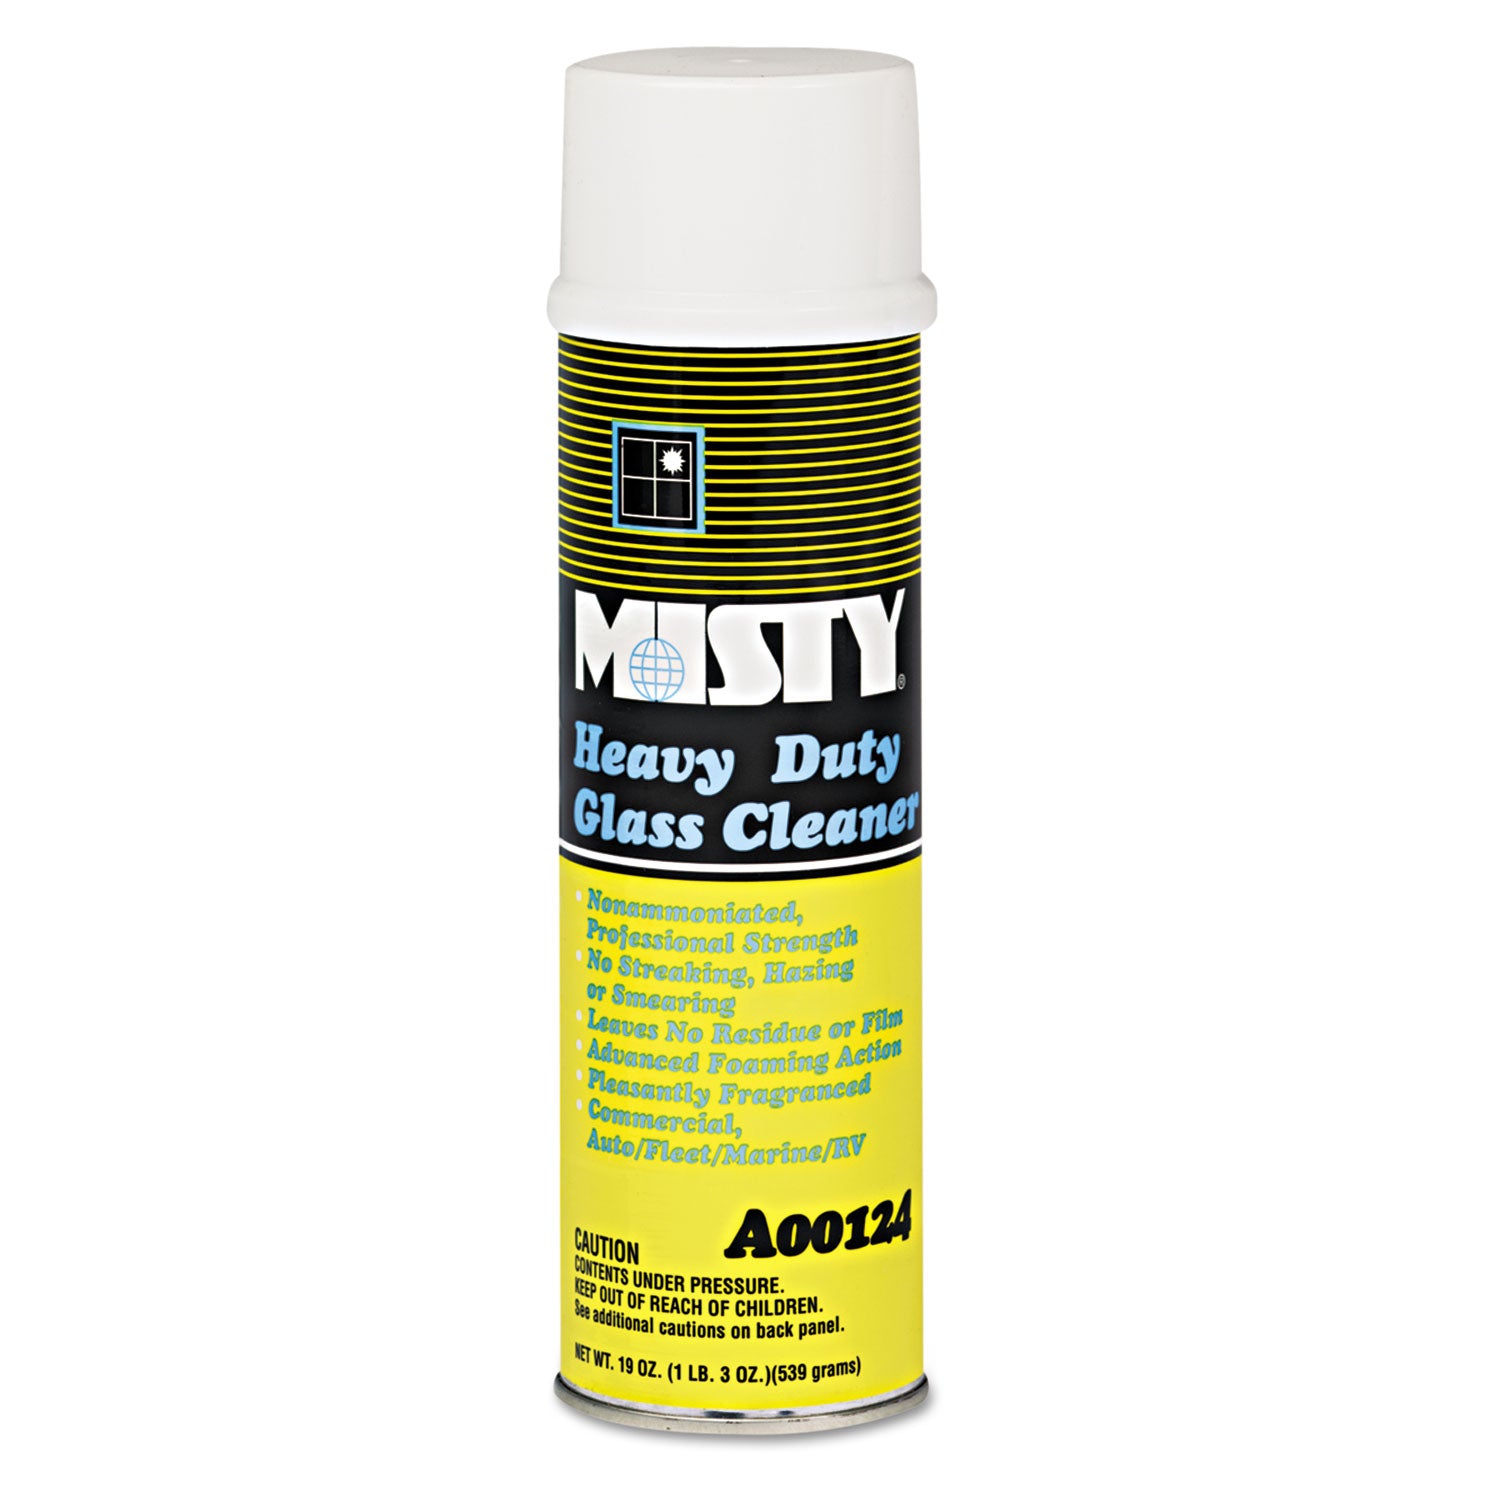 heavy-duty-glass-cleaner-citrus-20-oz-aerosol-spray-12-carton_amr1001482 - 1